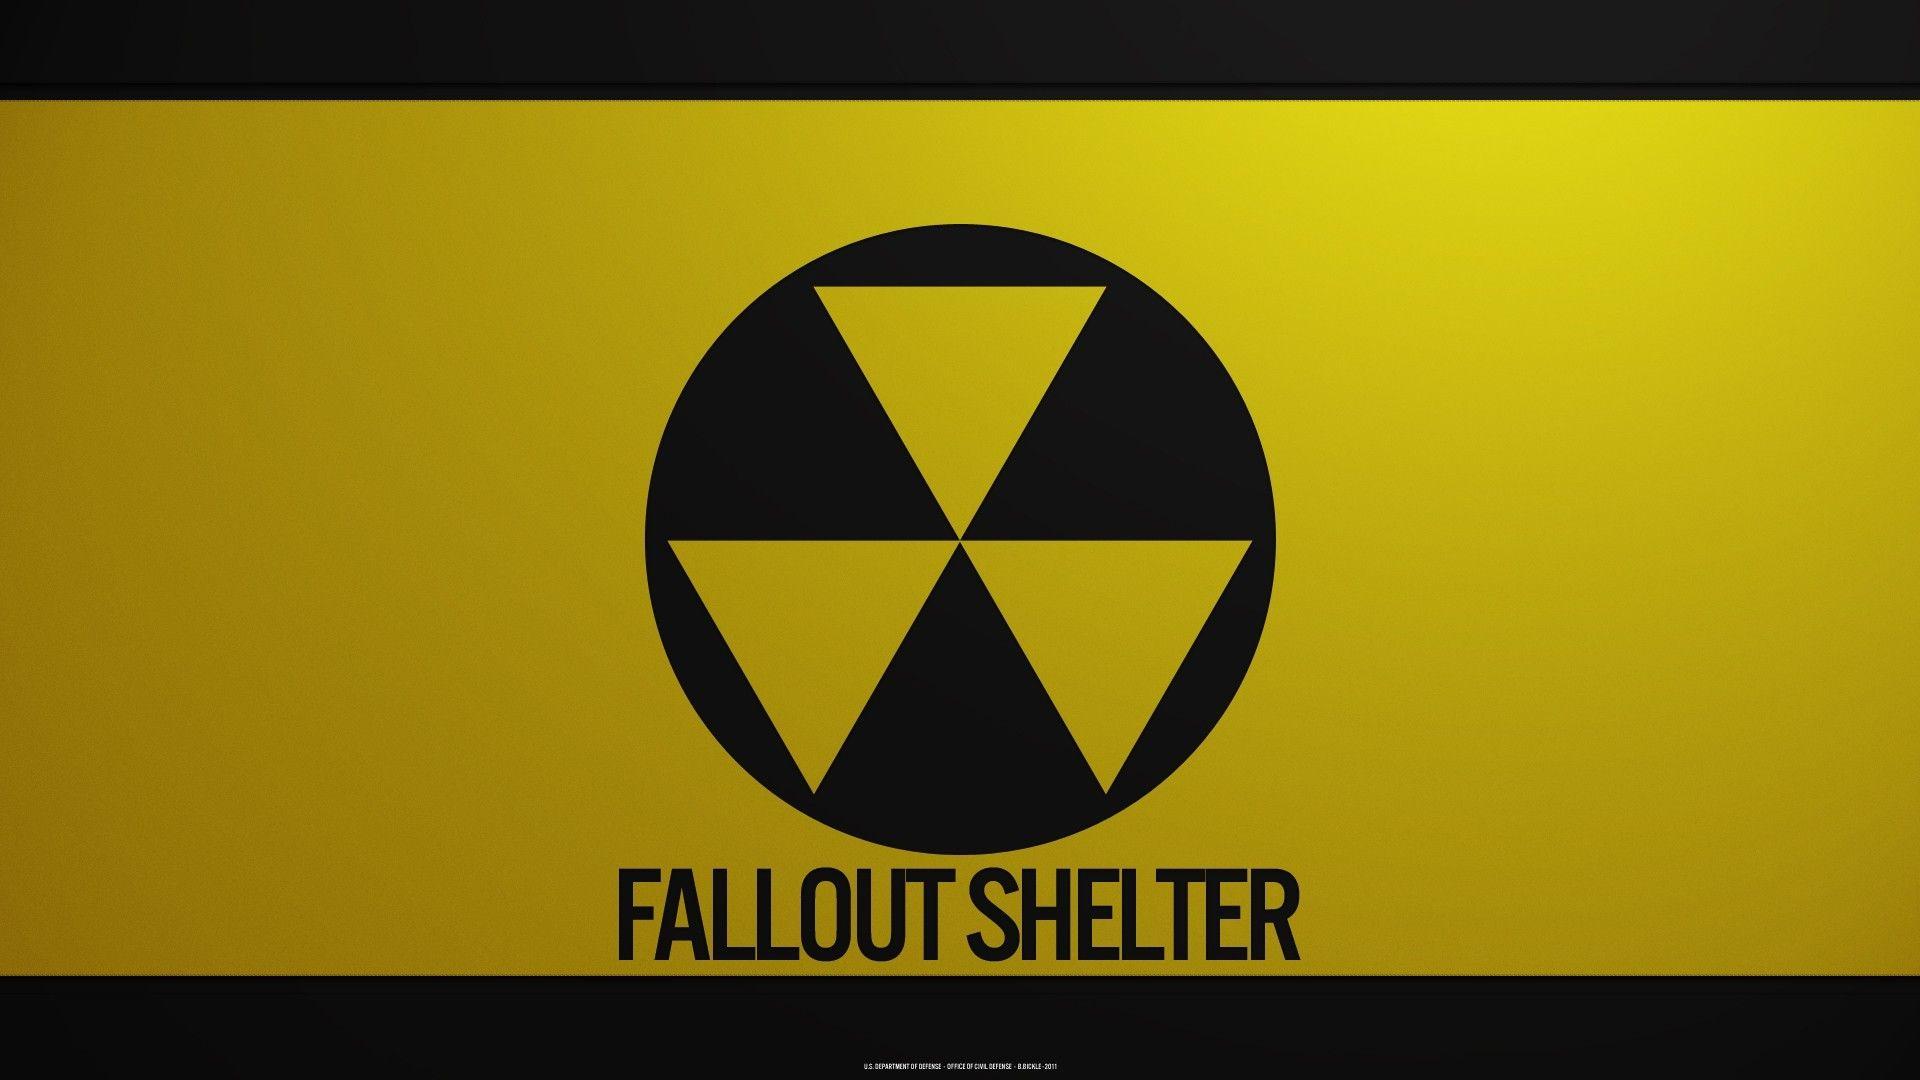 Fallout shelter wallpaper. PC